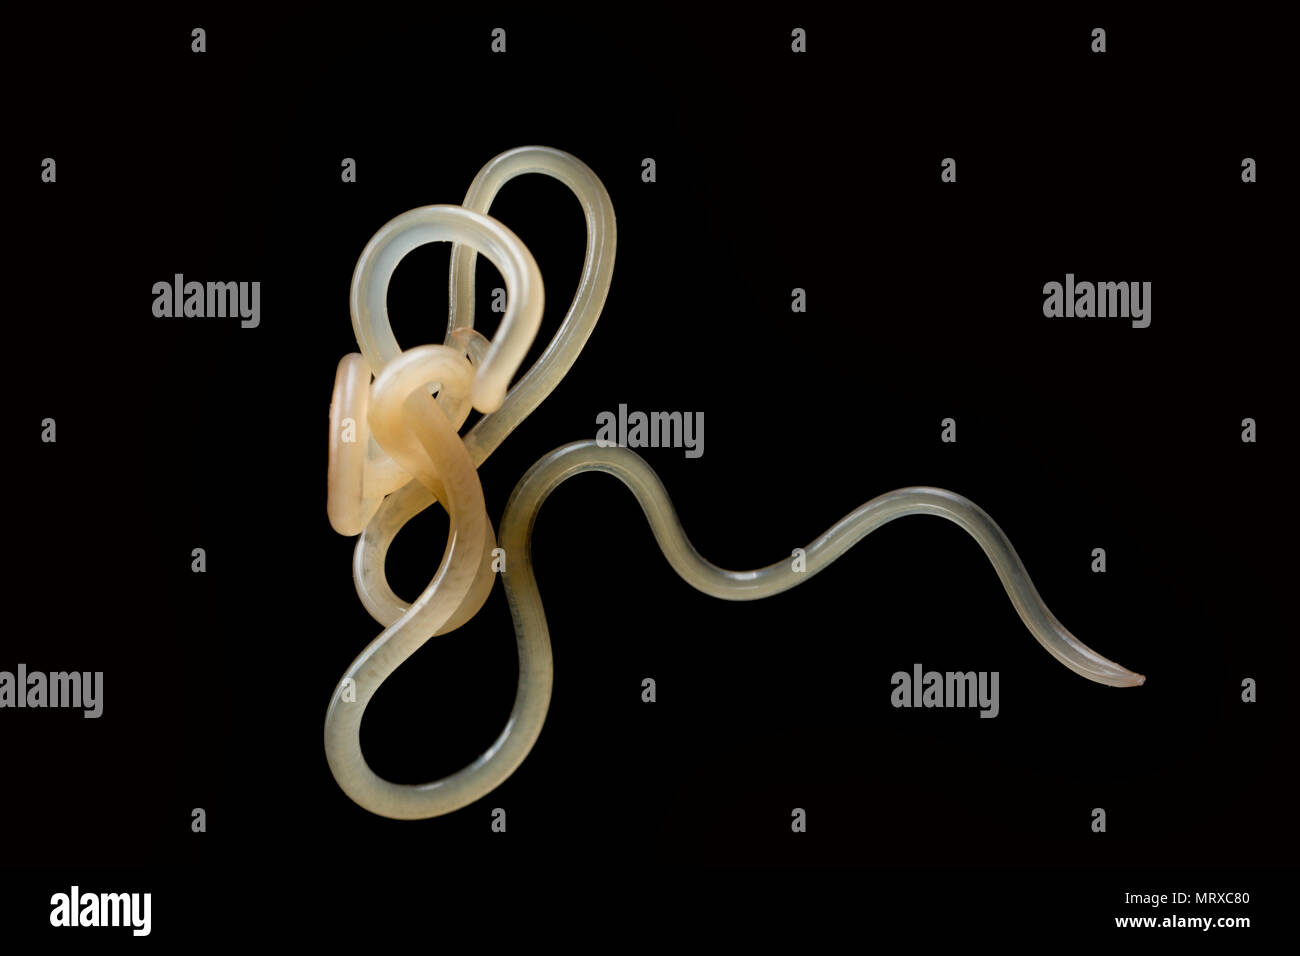 Dos nematodos parasitarios, o nematodos, gusanos encontrados en los intestinos de rastreo eviscerado, Caballa Scomber scombrus, Inglaterra Foto de stock